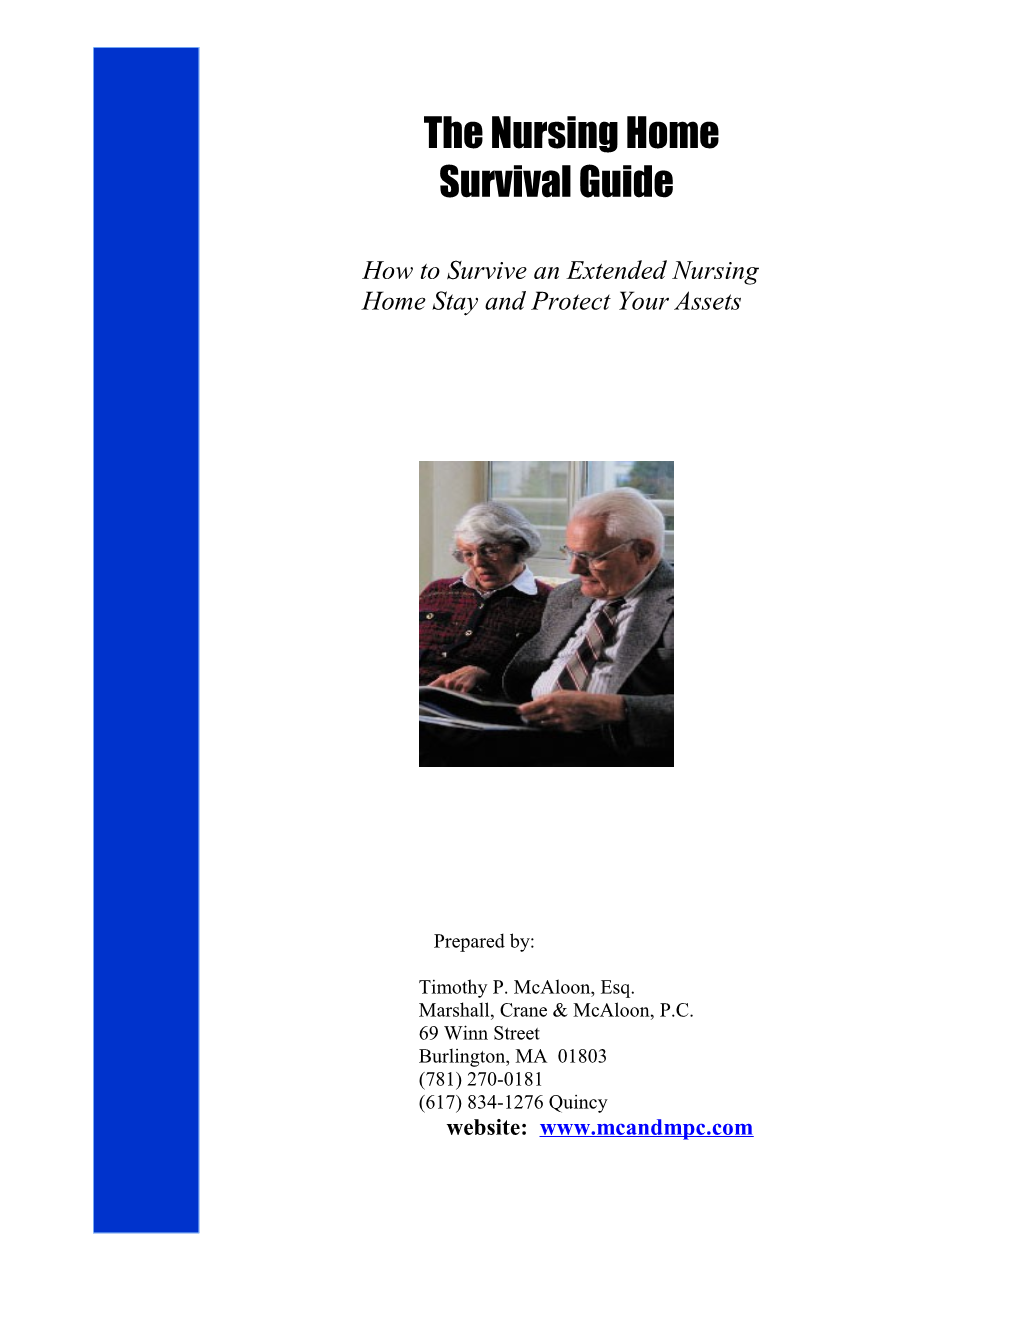 The Nursing Home Survival Guide